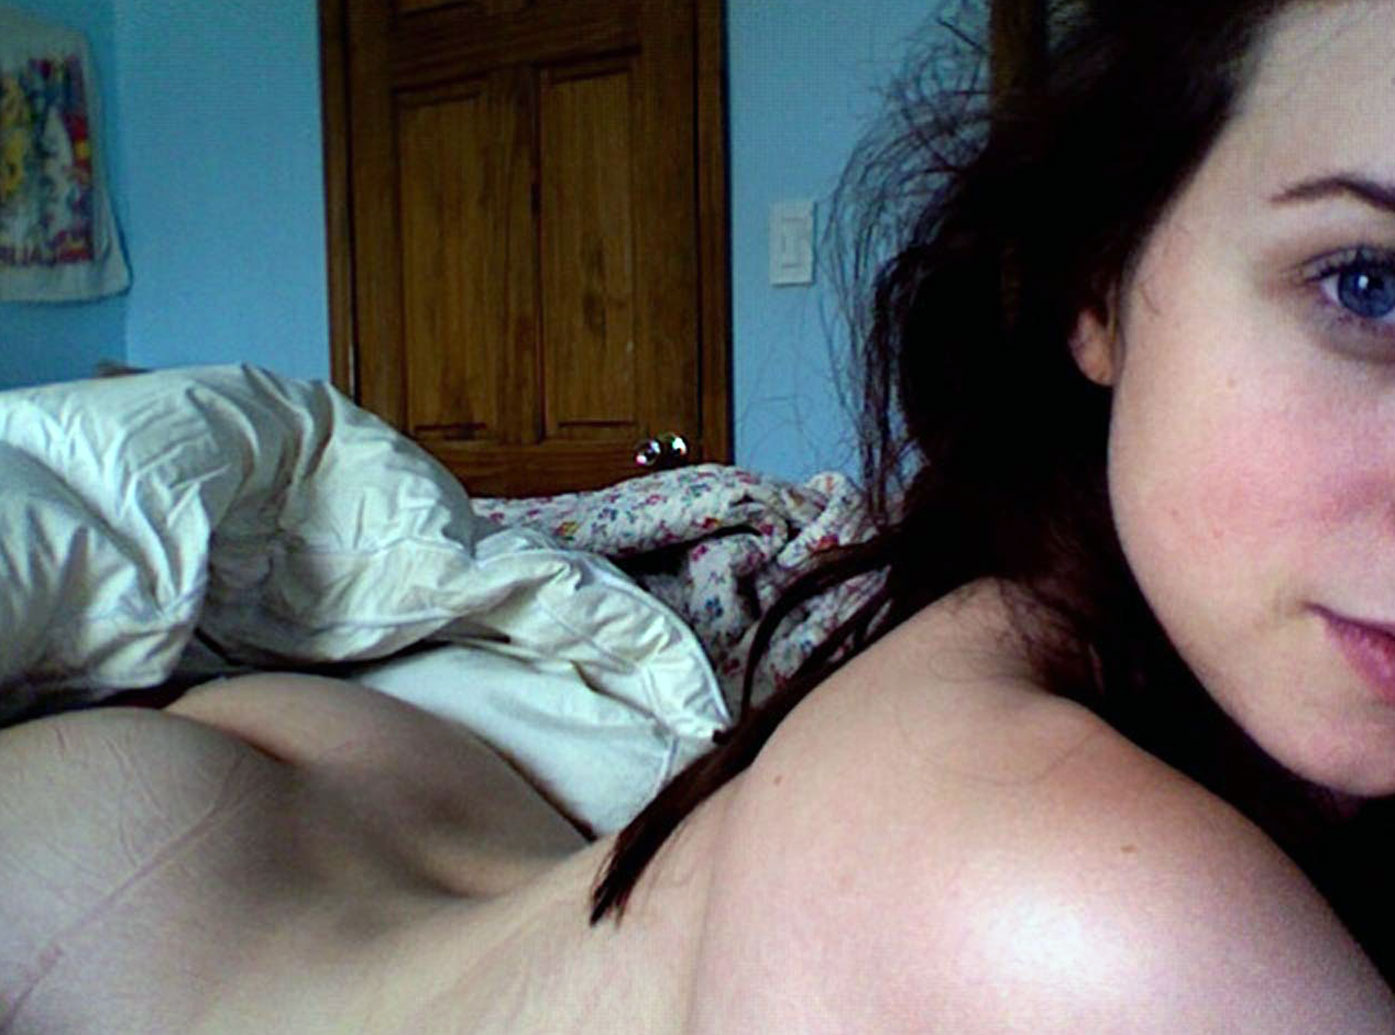 Zoe Kazan Nude Photos - LEAKED ONLINE.